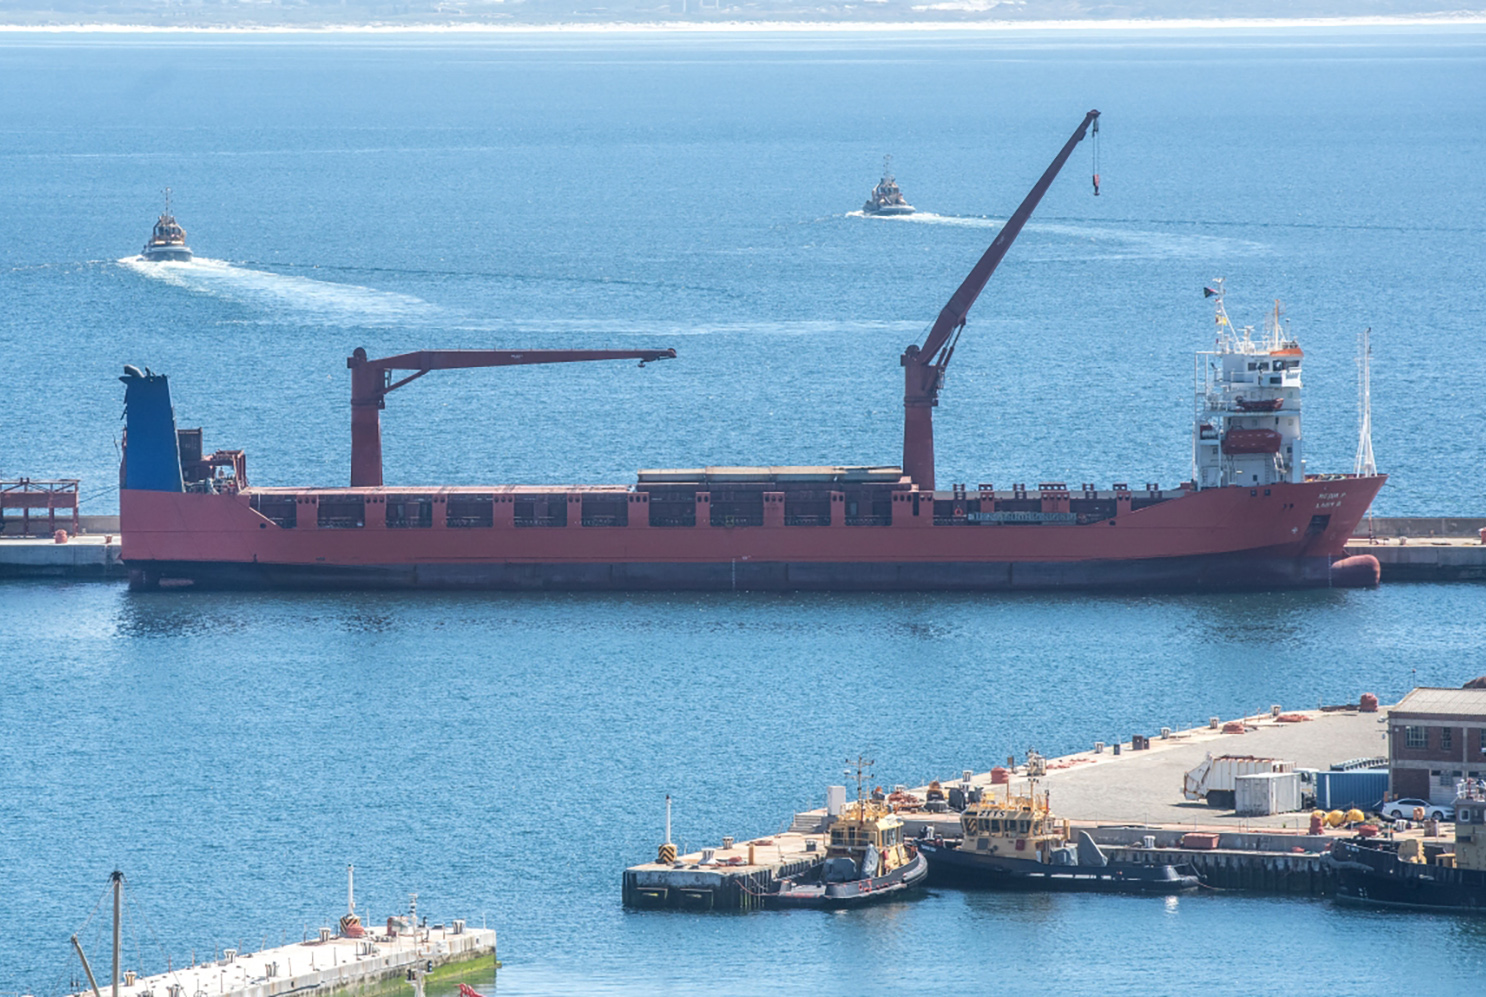 Russian cargo ship Lady R